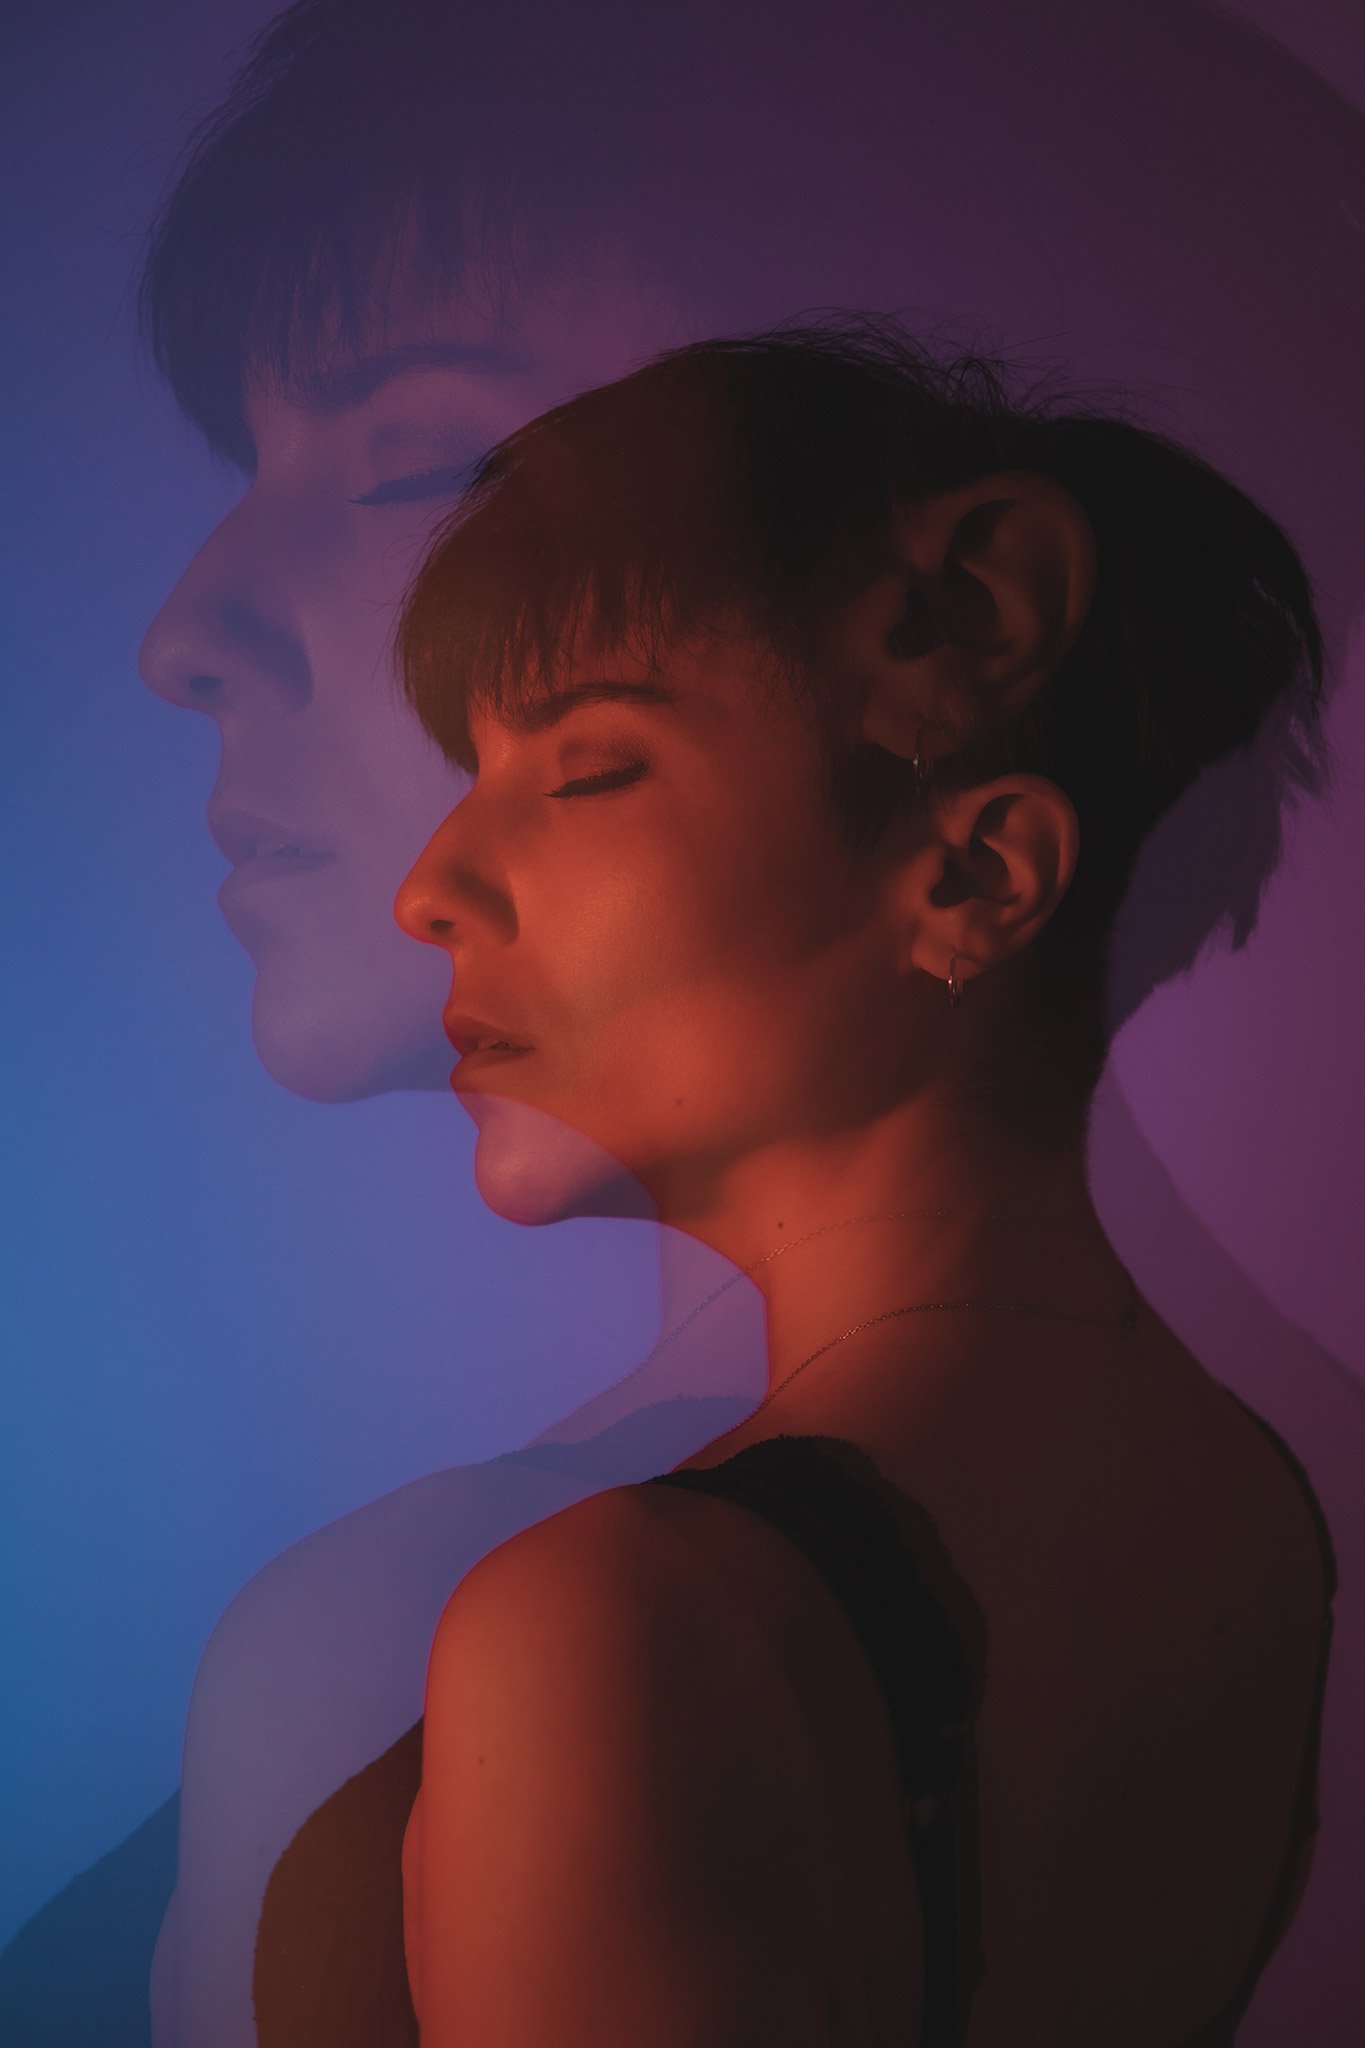 Self-Portrait with RGB Lights